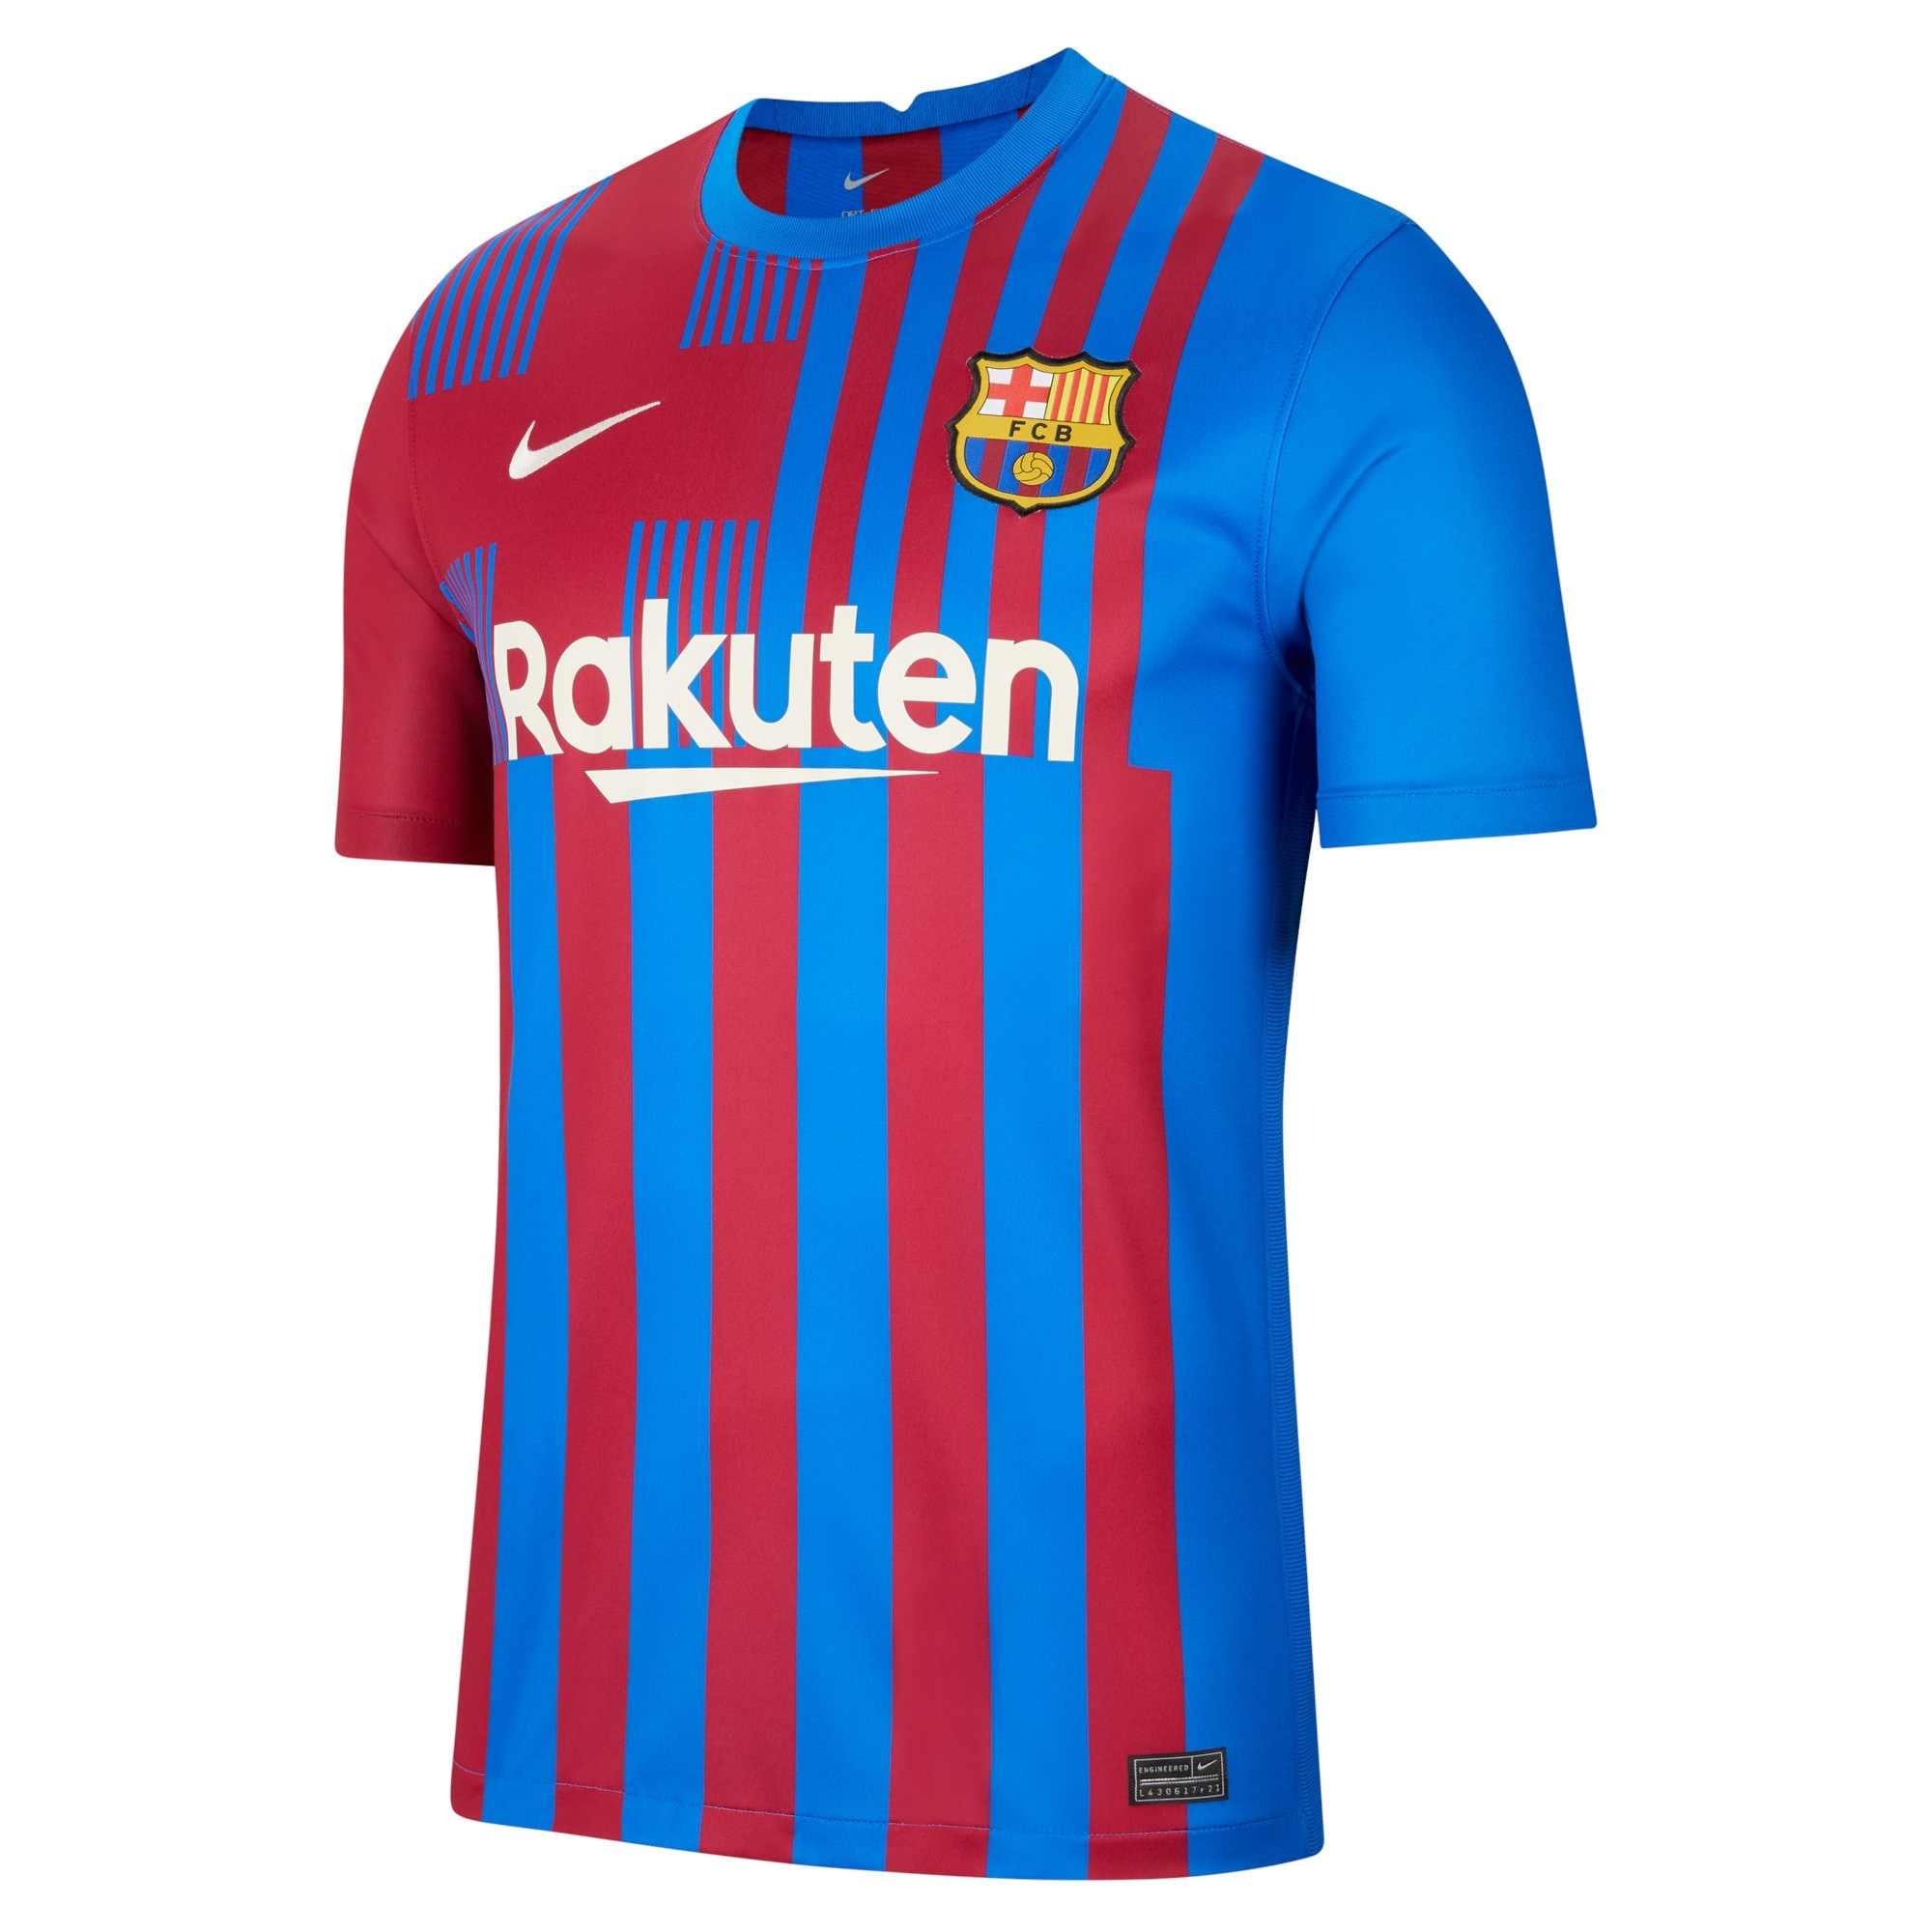 Barcelona Home Stadium Shirt 2021-22 with Memphis 9 printing